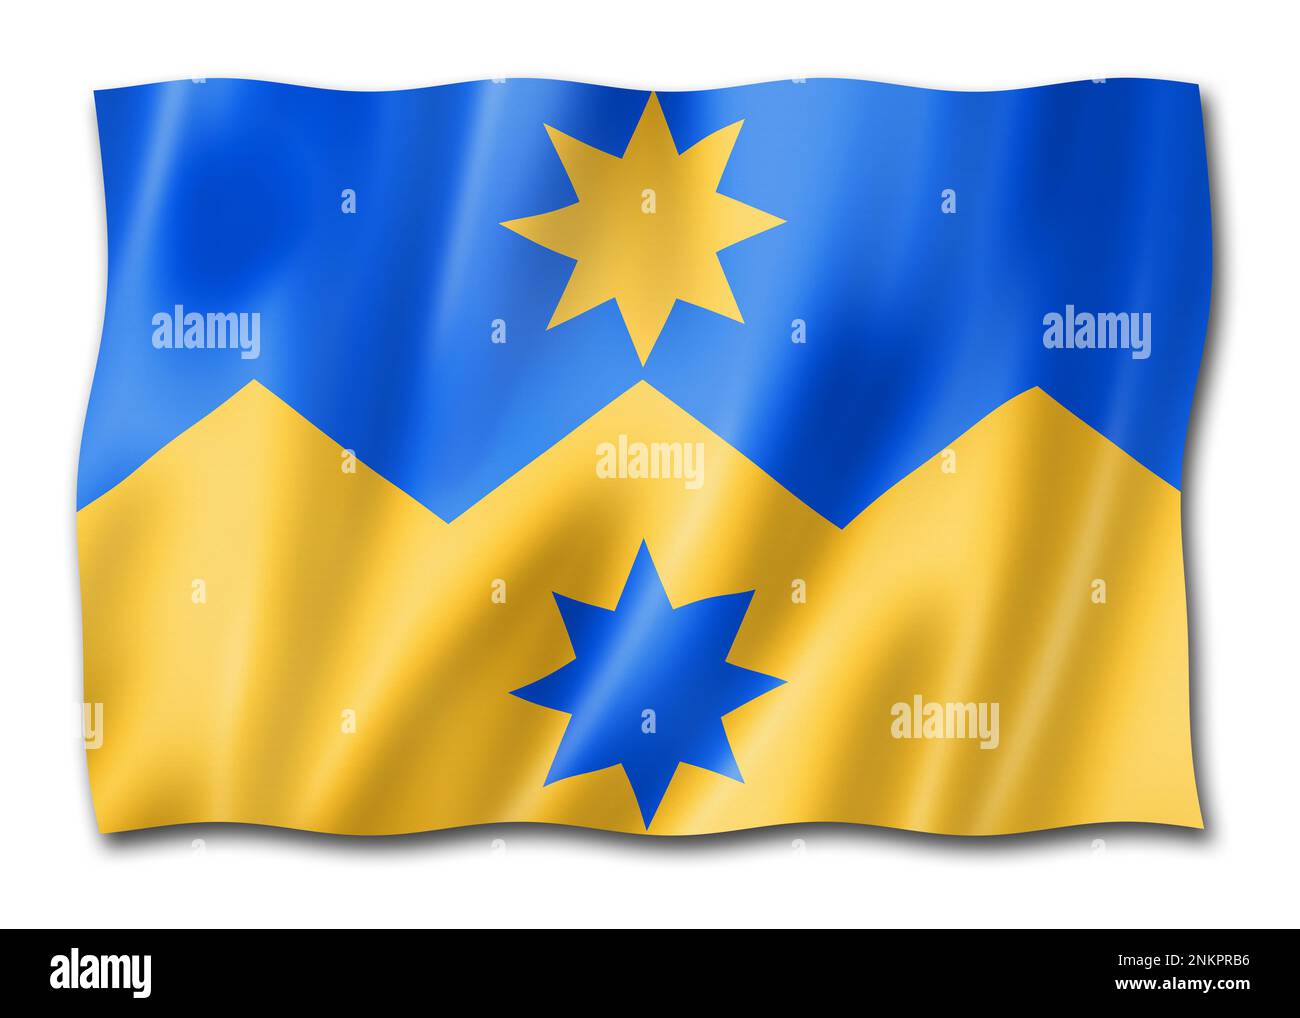 Otago region flag, New Zealand waving banner collection. 3D illustration Stock Photo